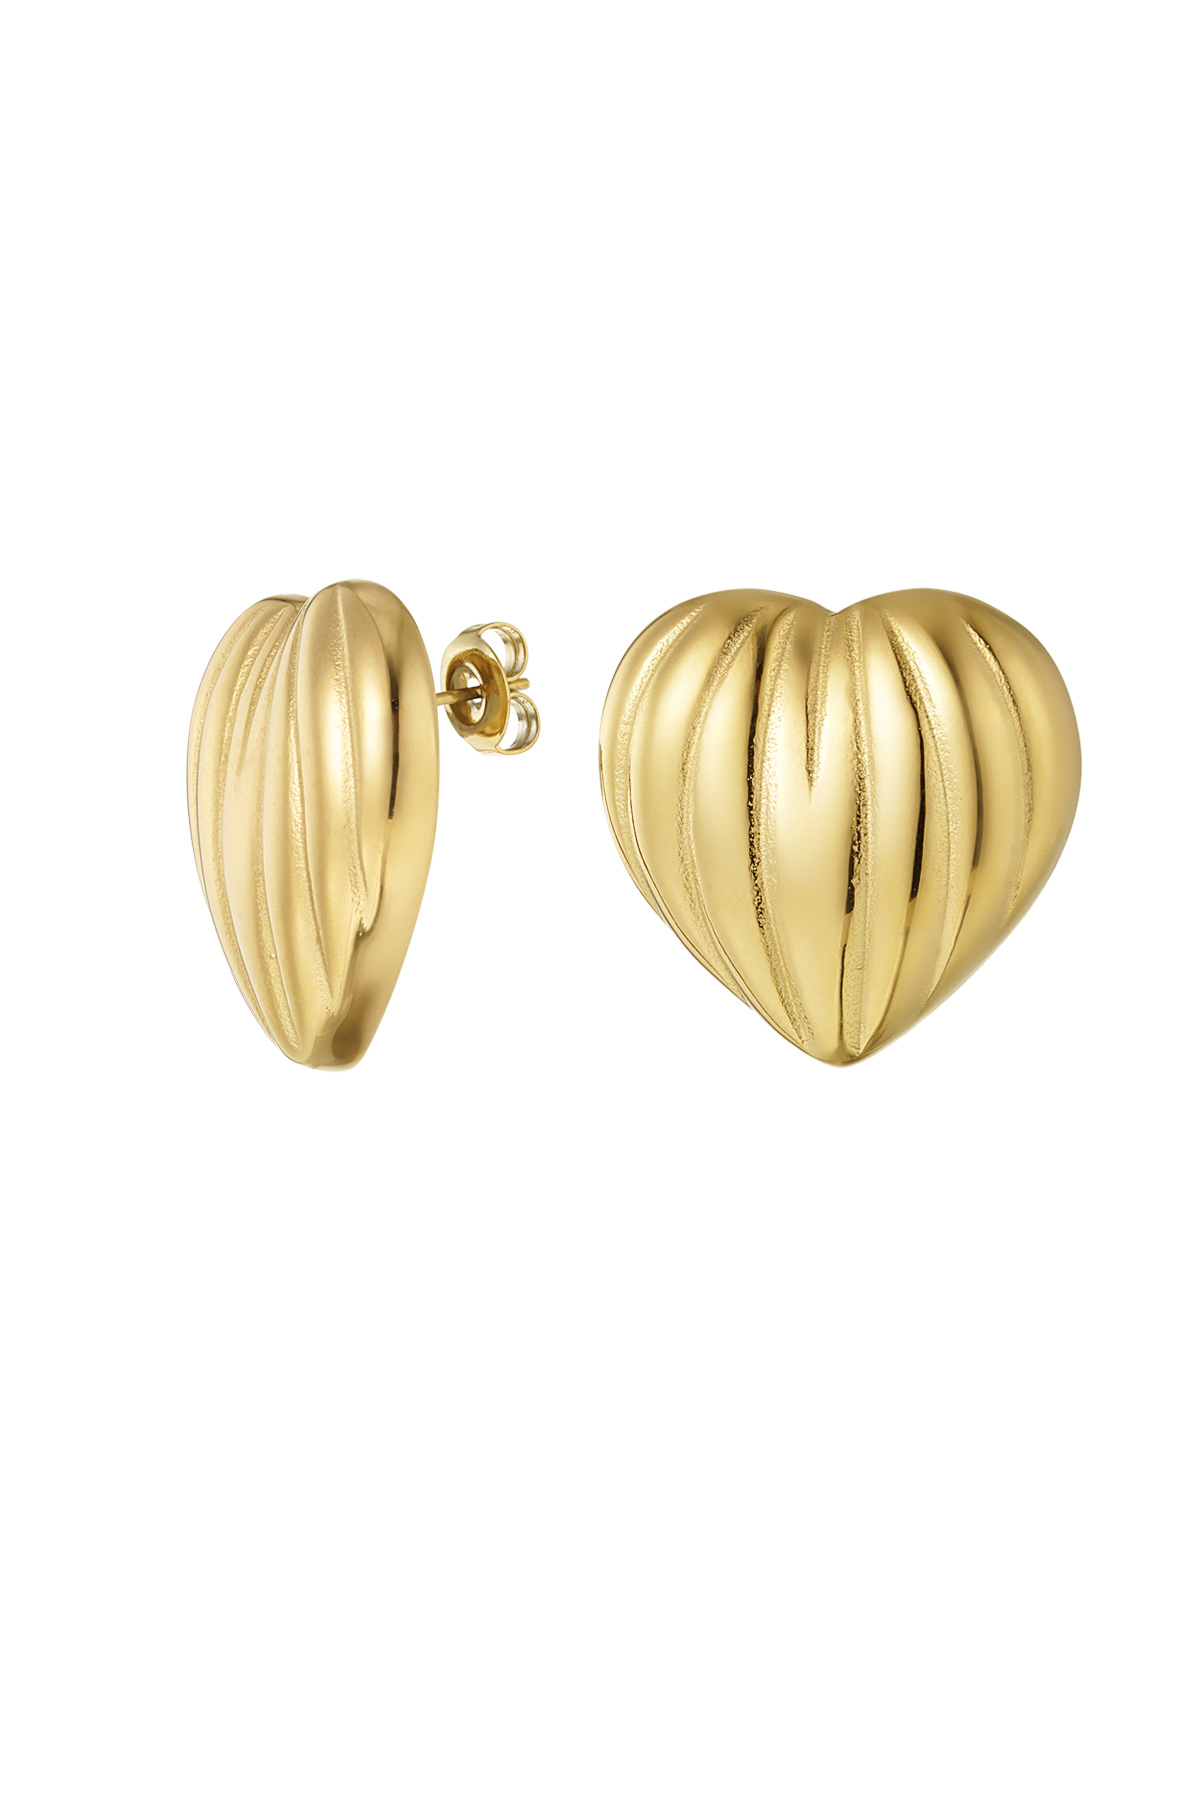 Earrings enormous heart - gold 